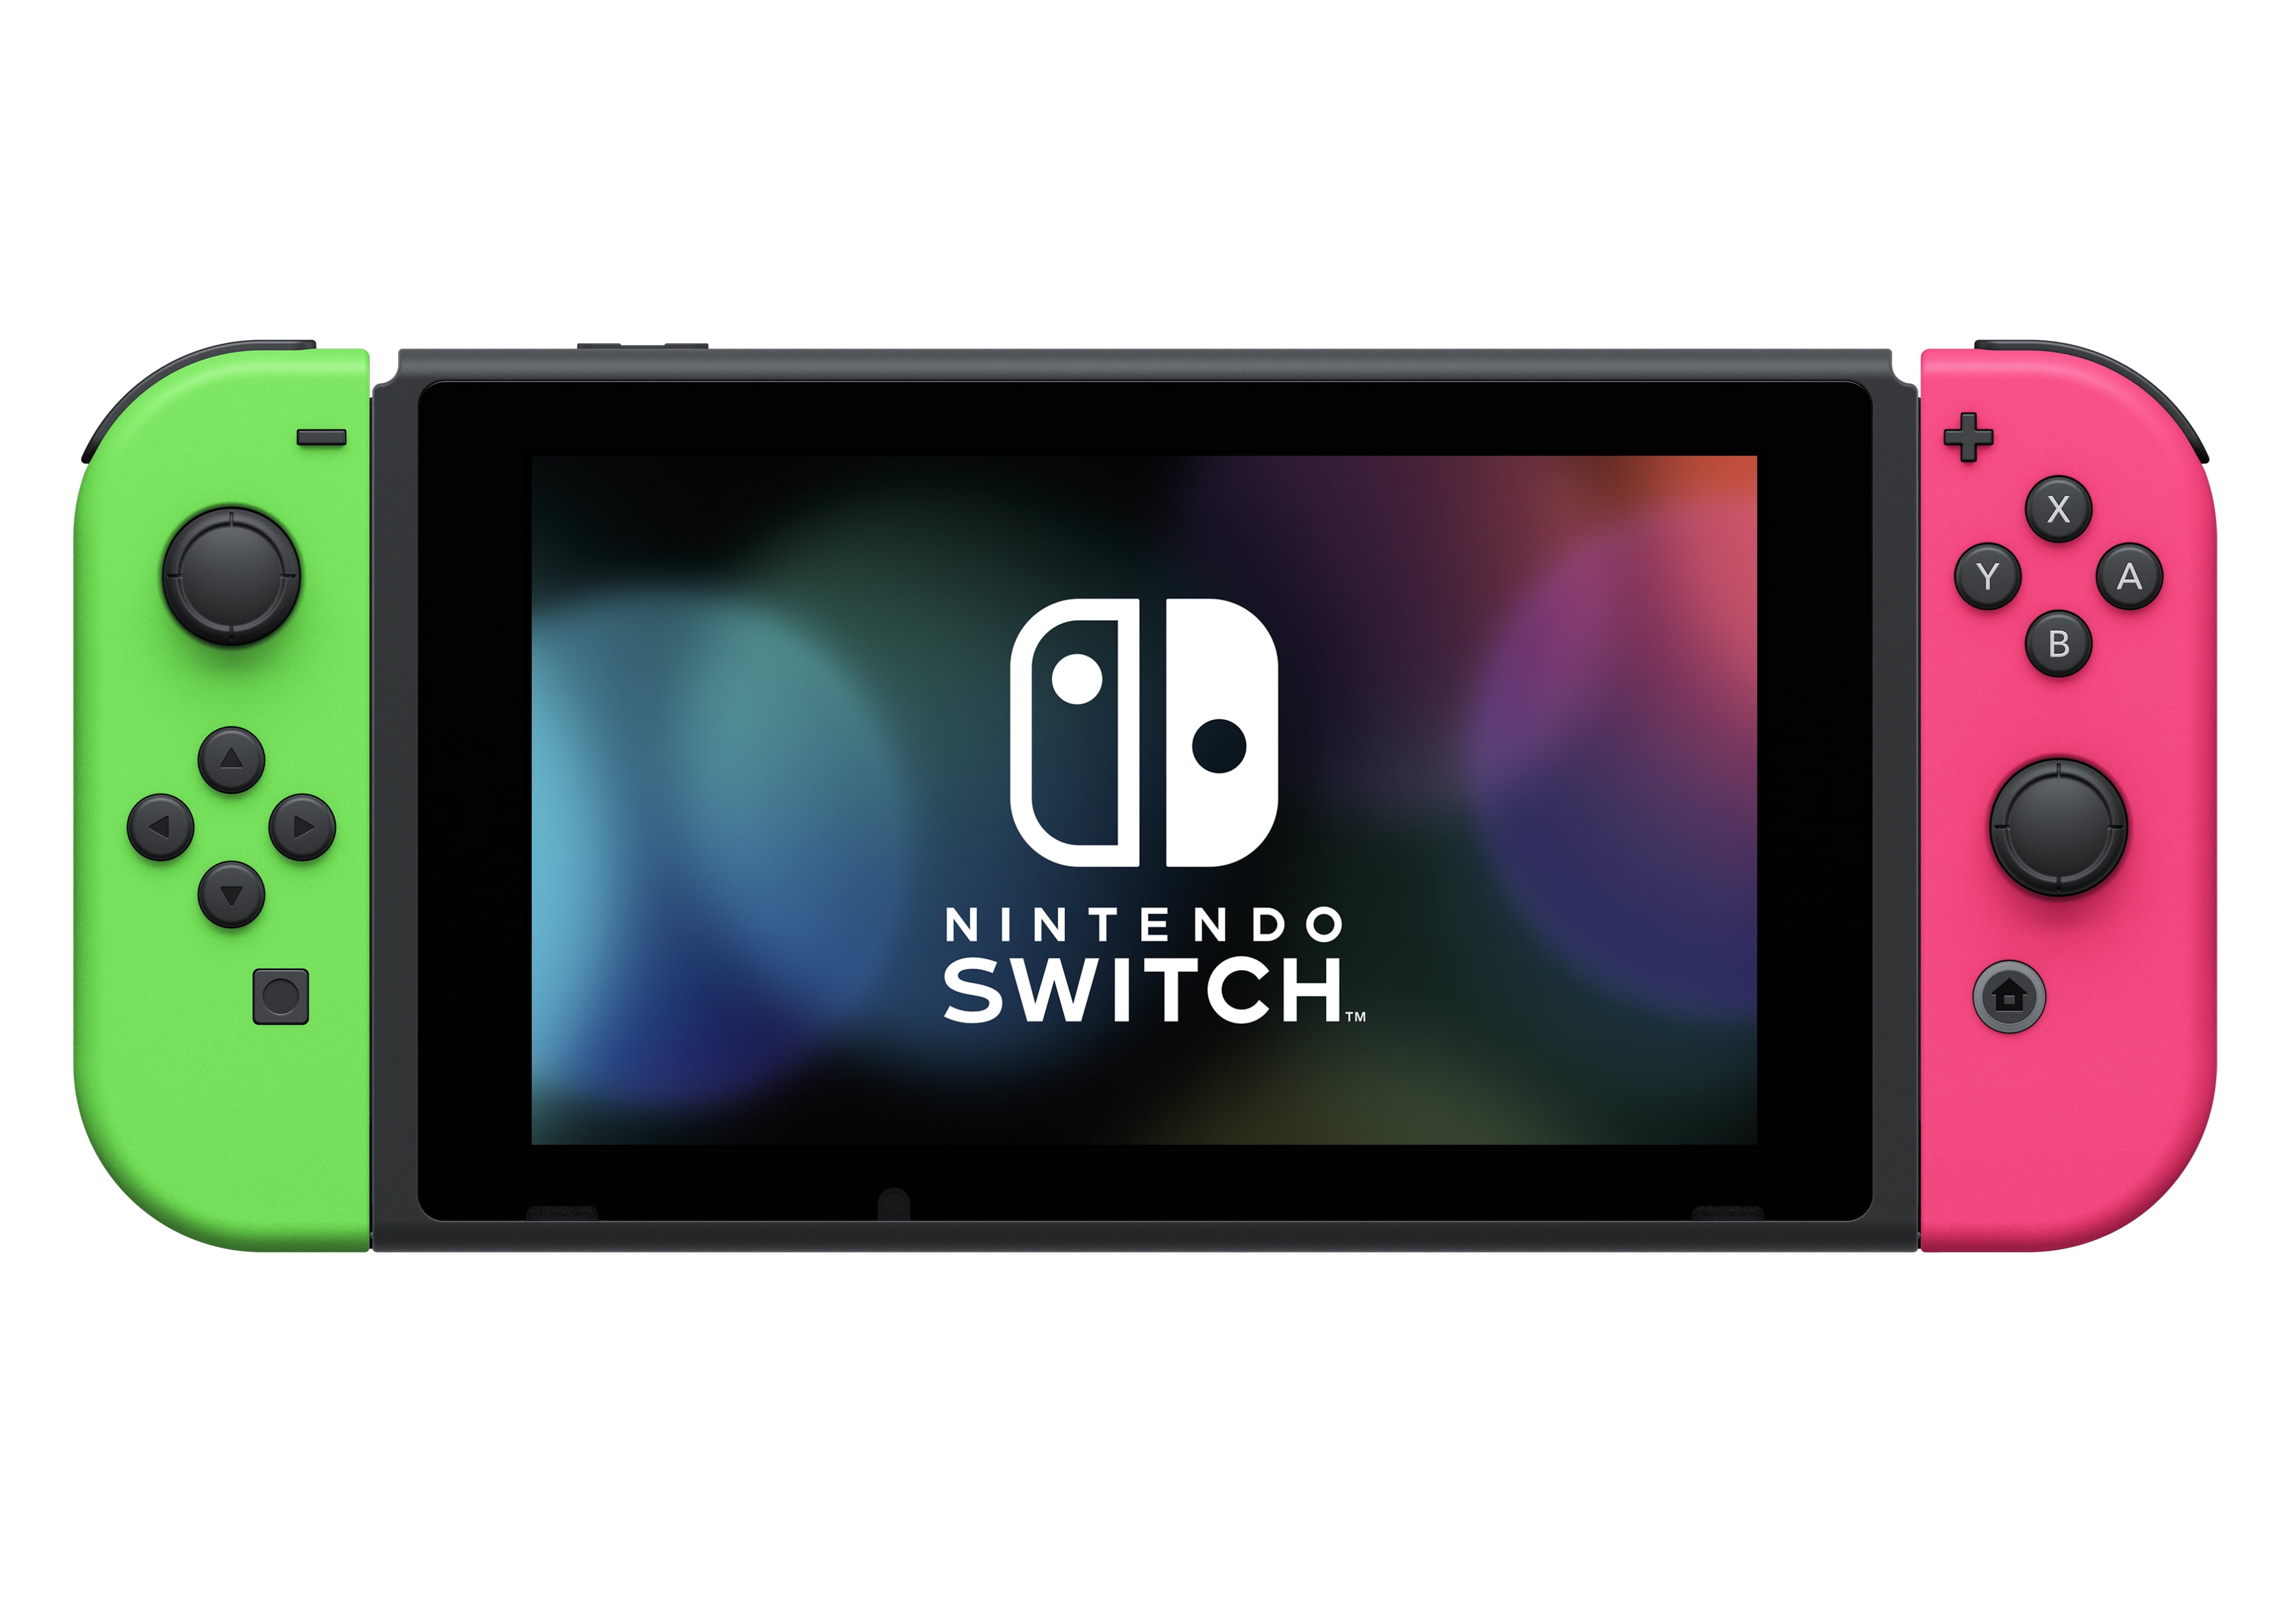 Nintendo Switch Hardware with Splatoon 2 + Neon Green/Neon Pink Joy-Cons (Nintendo  Switch) - Walmart.com - Walmart.com